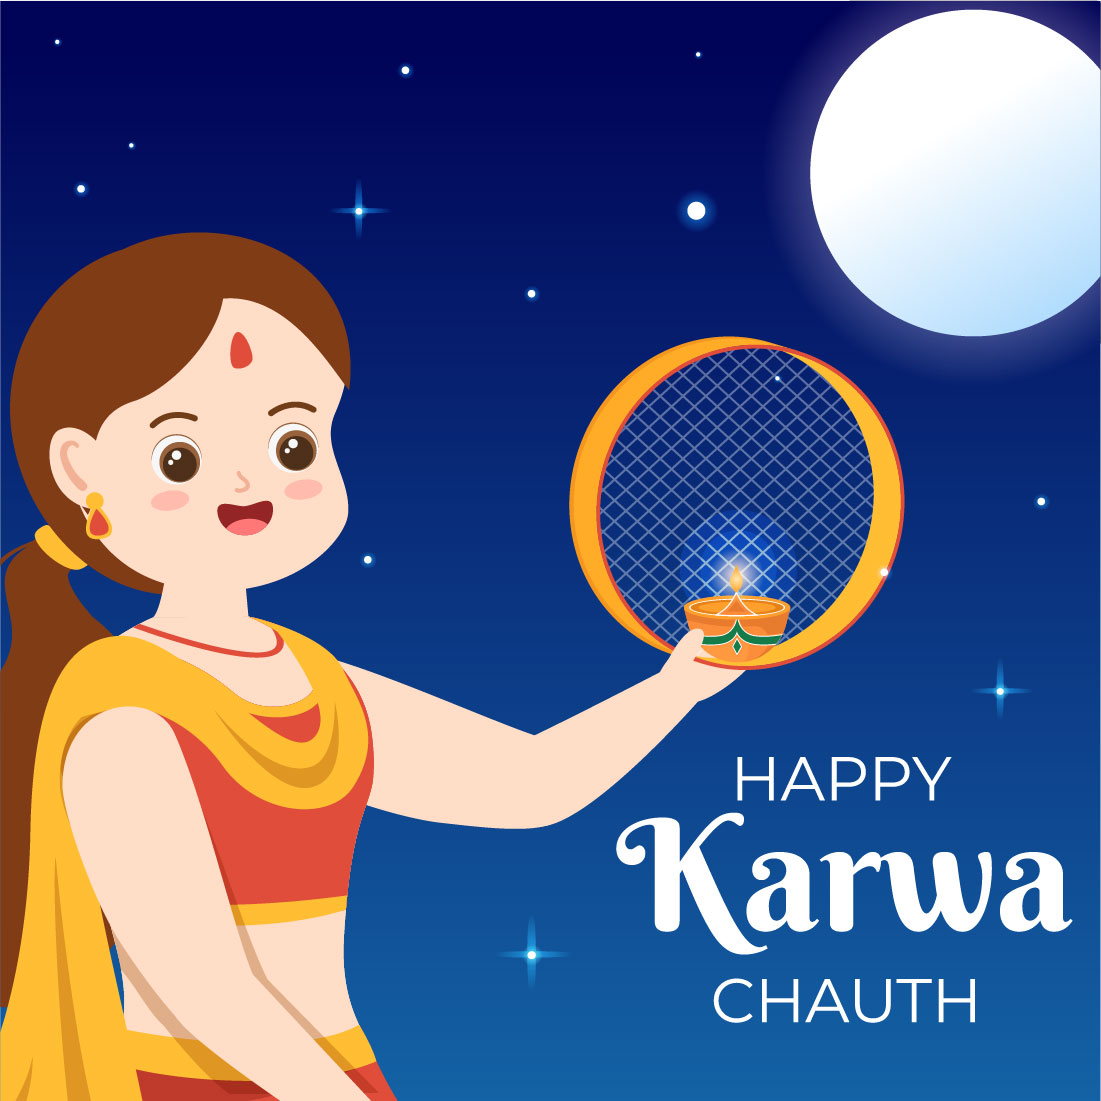 13 Karwa Chauth Festival Illustration Cover Image.